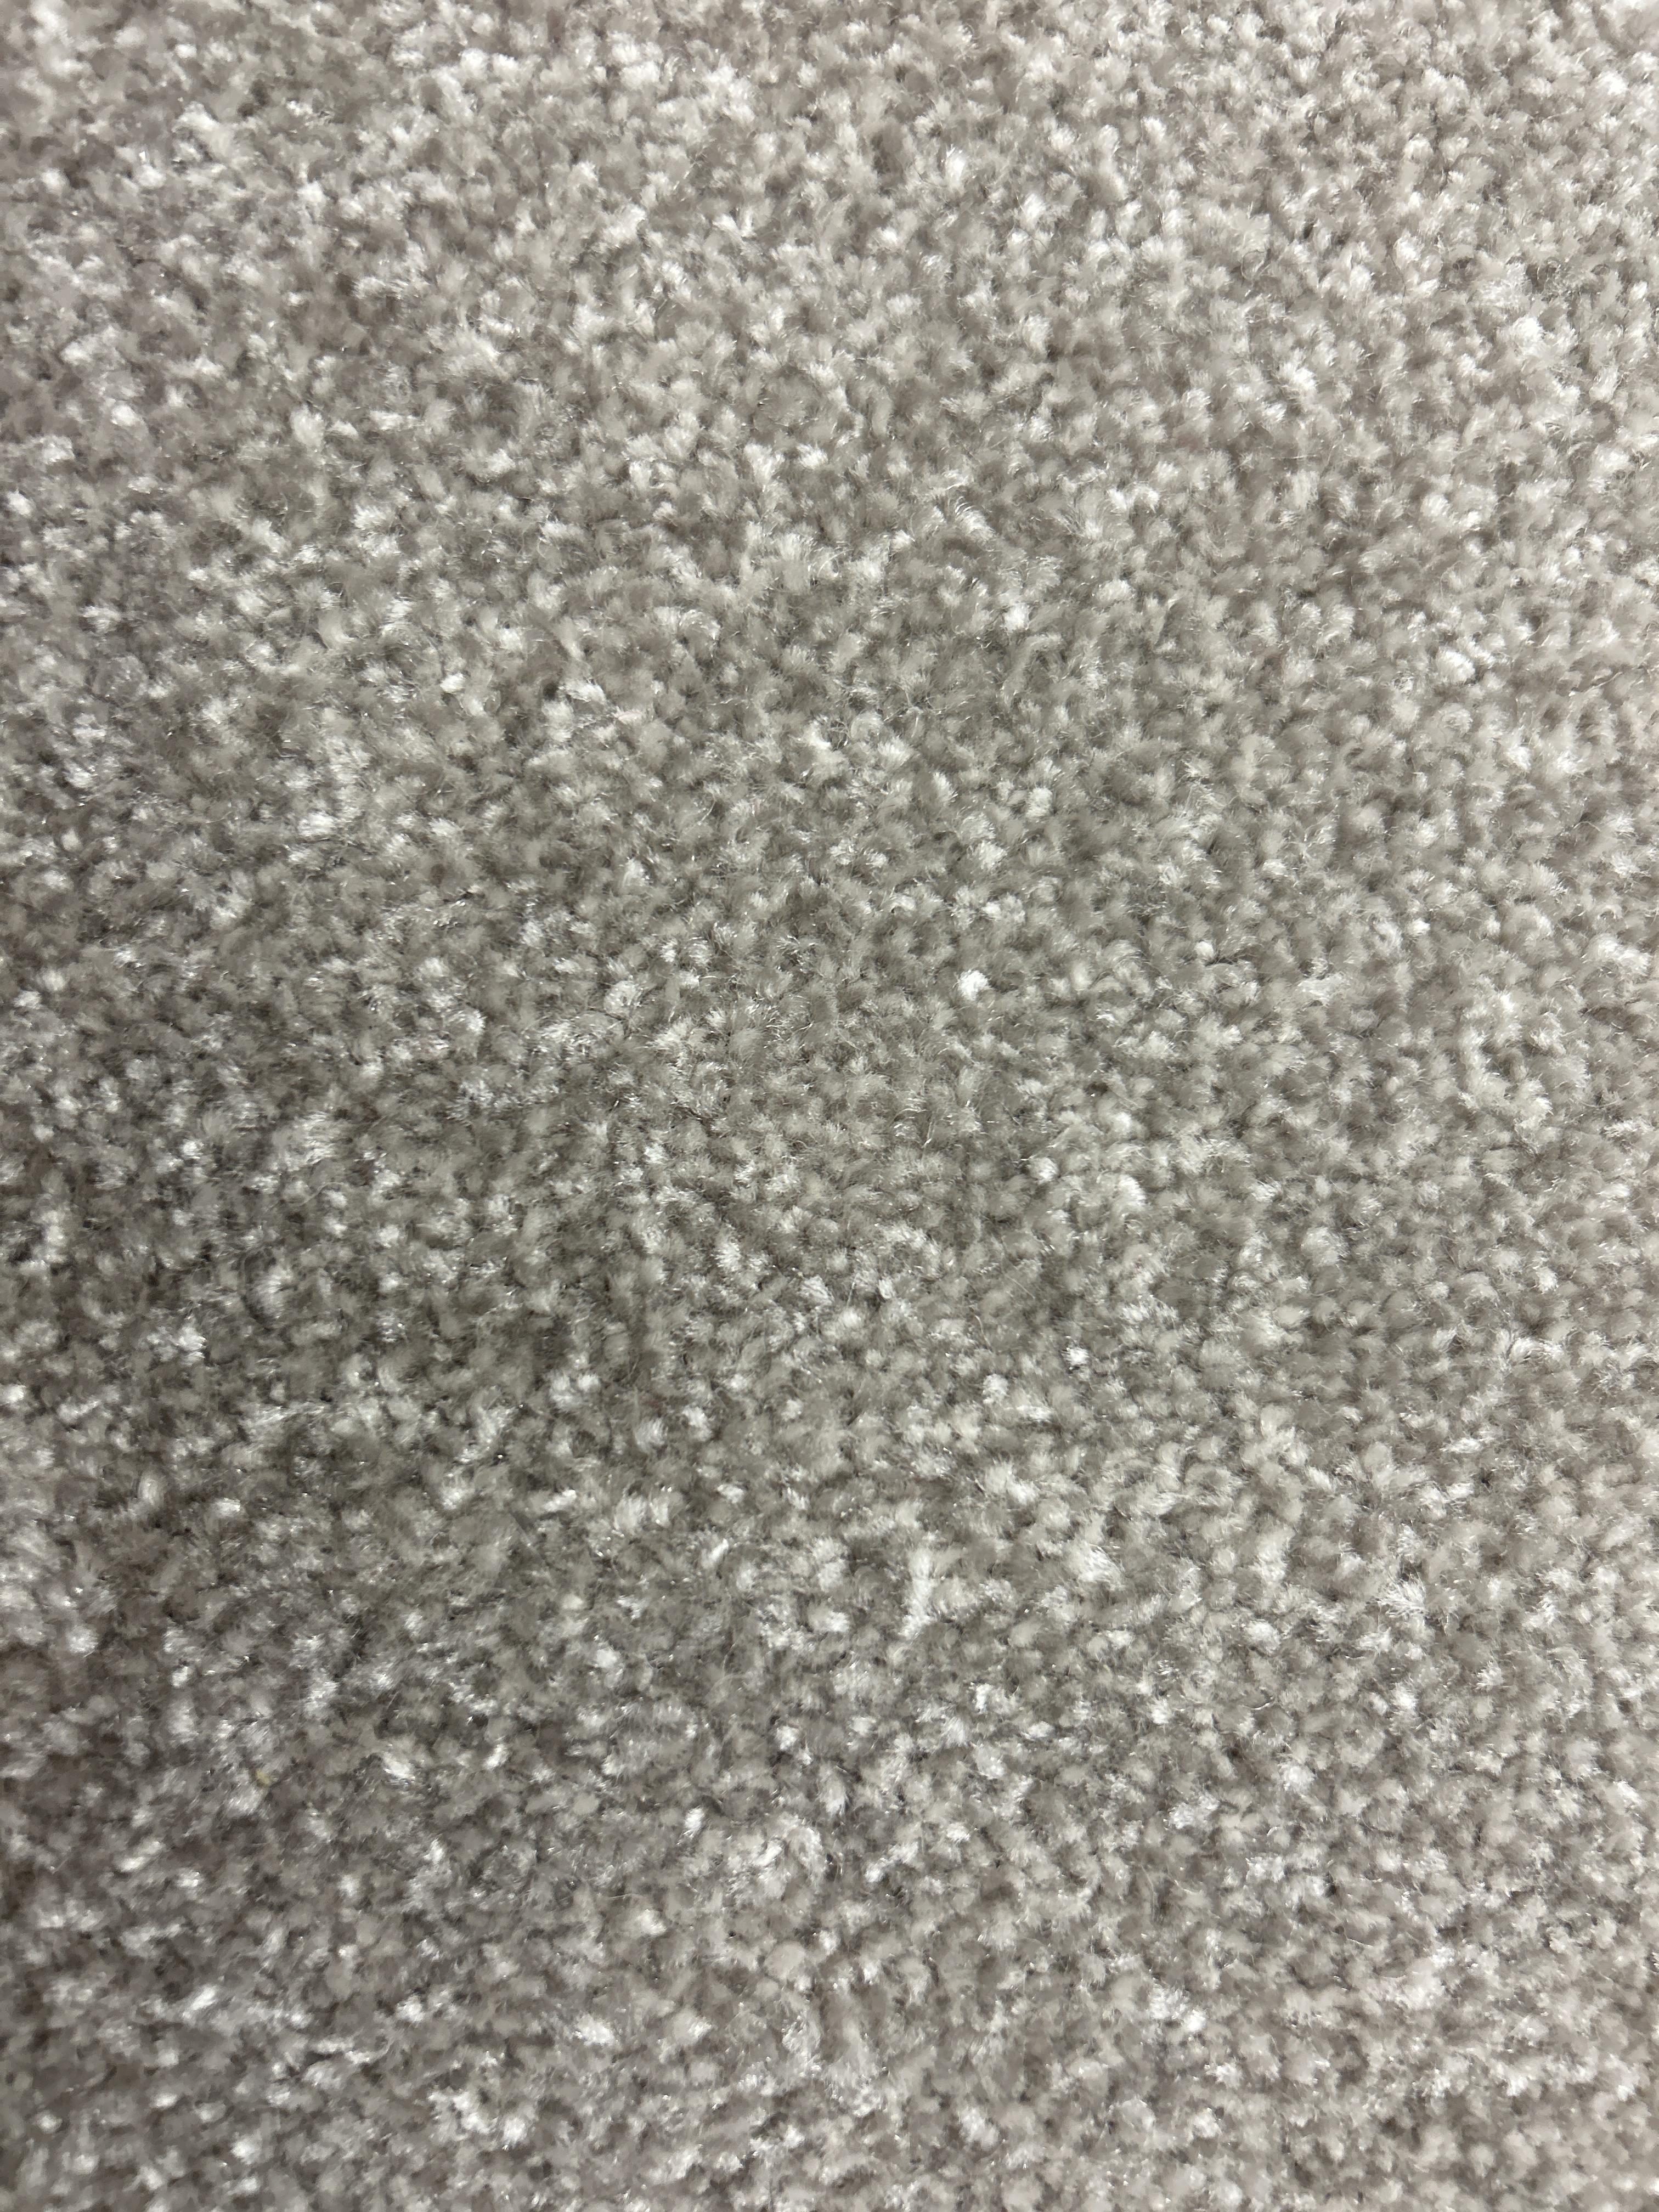 Supertwist Carpet